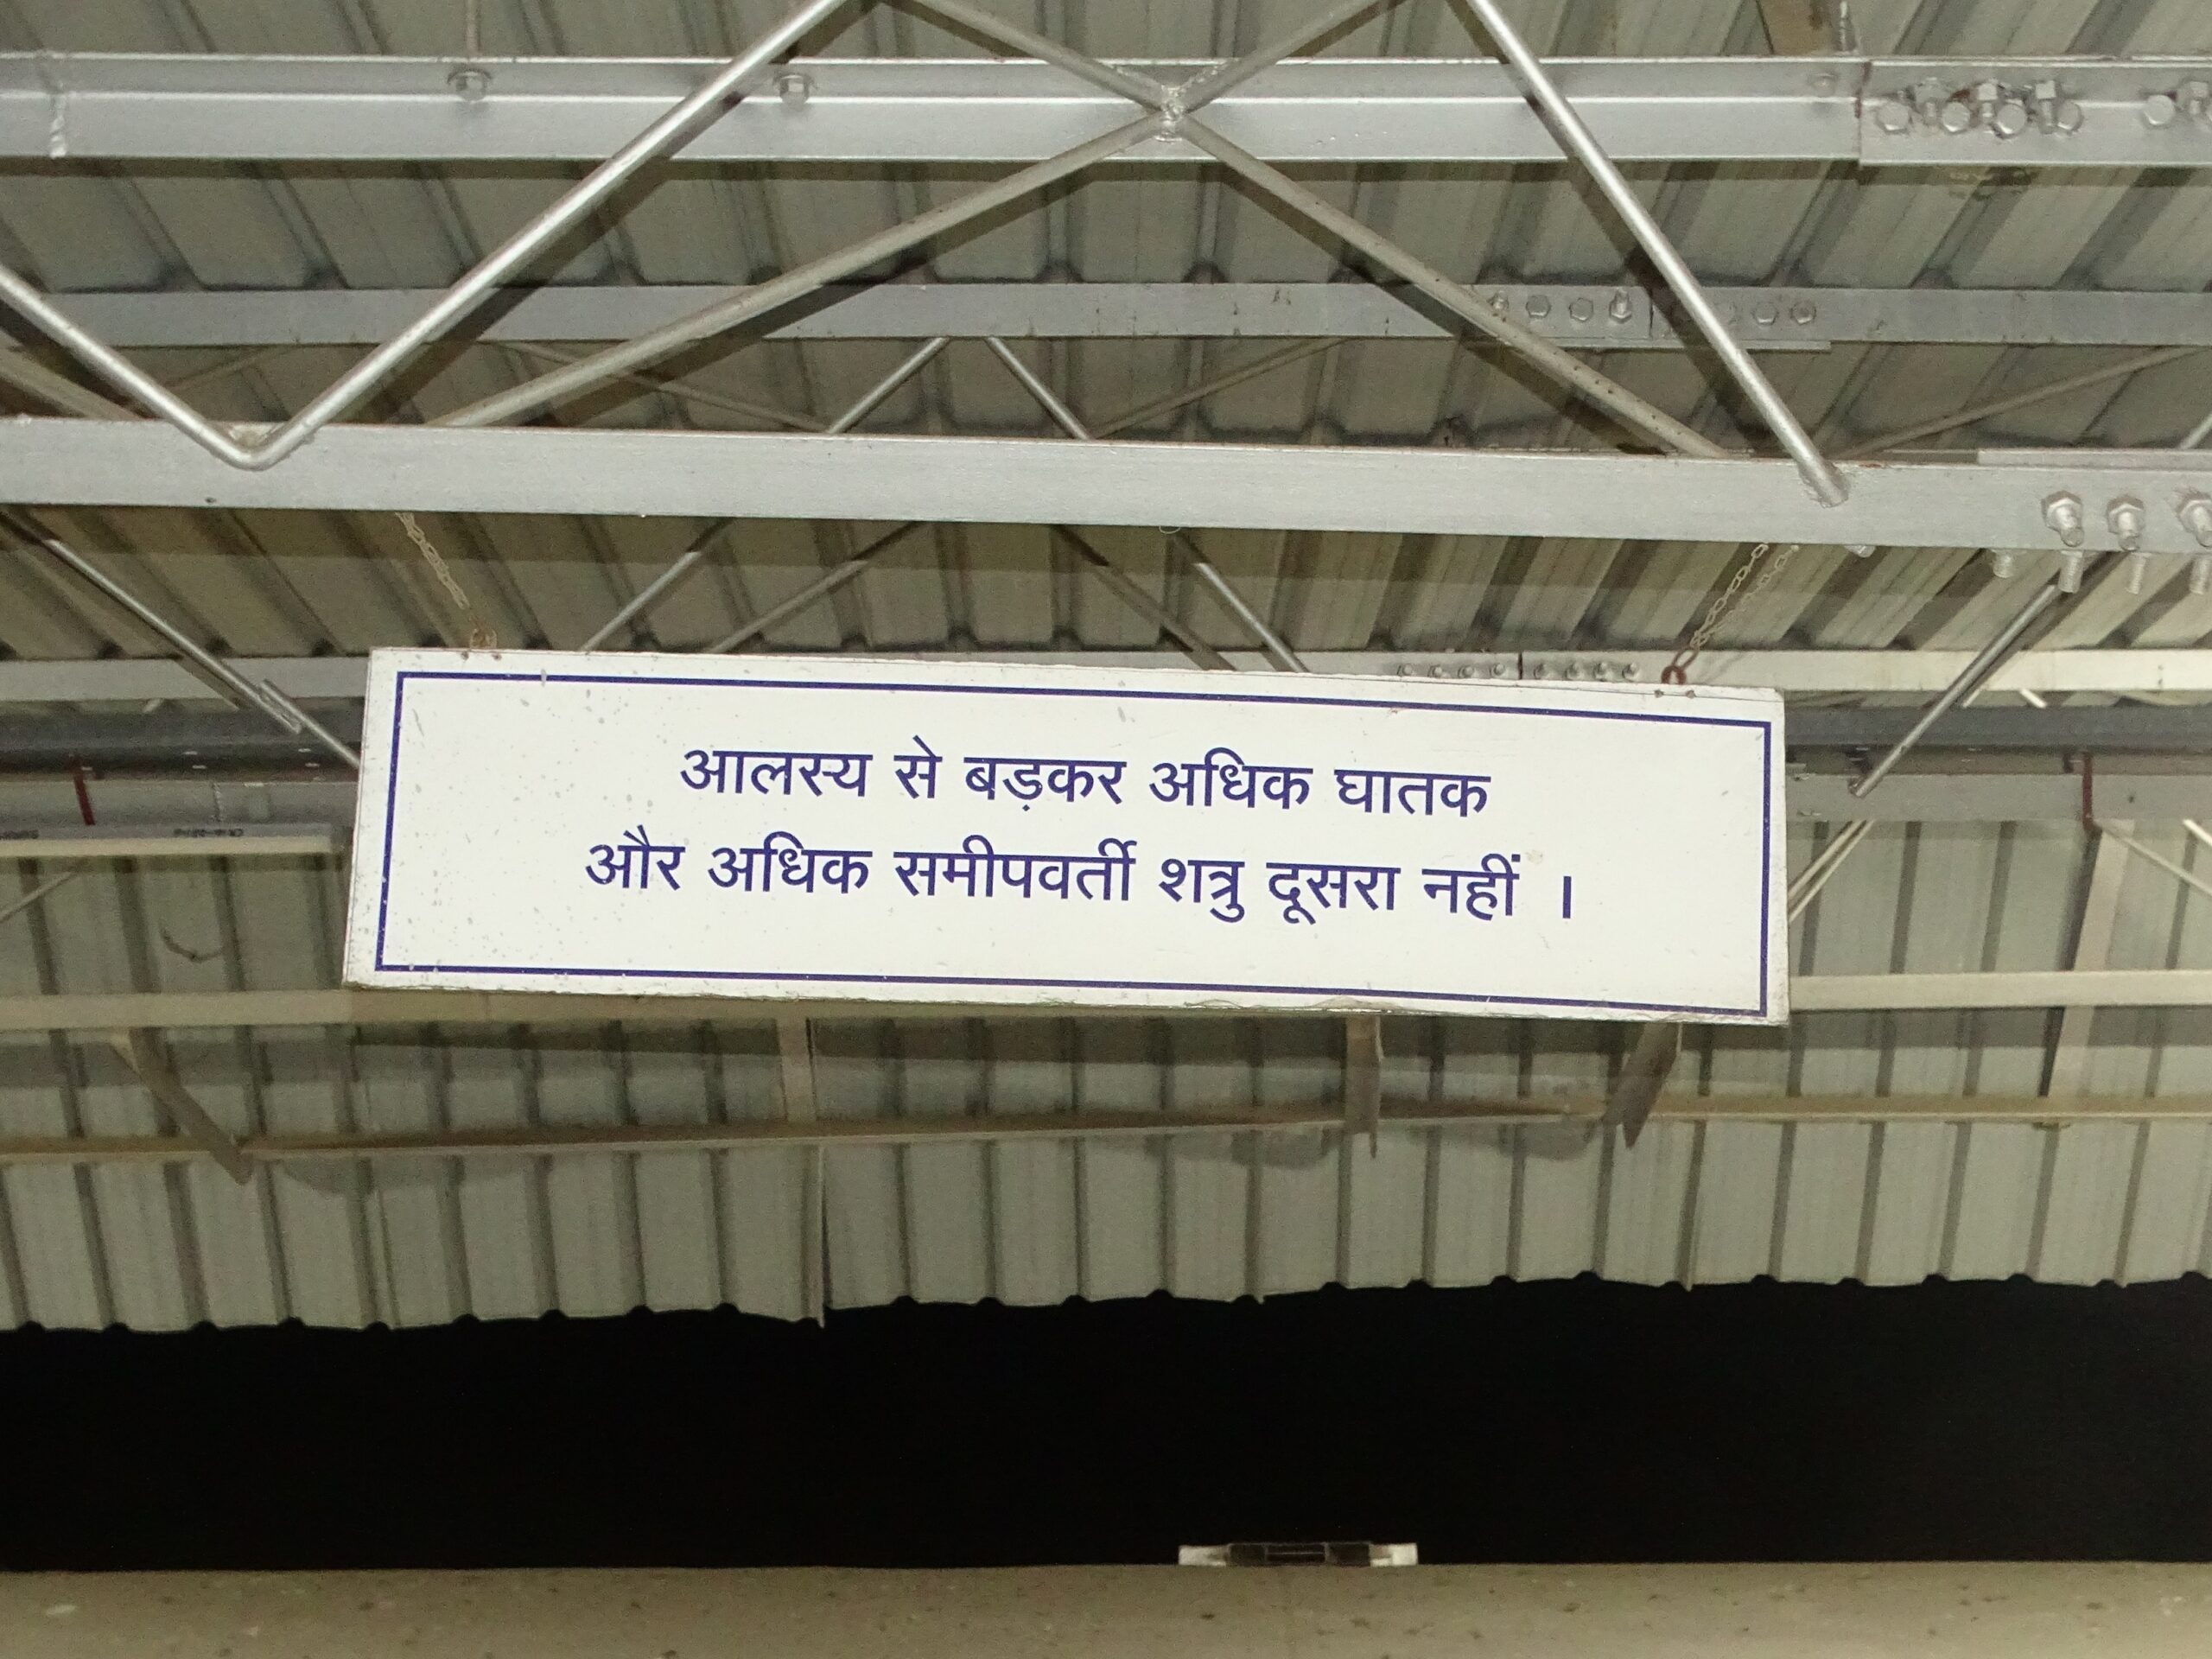 About - Laziness, The Biggest Enemy (Latur railway station, Maharashtra)